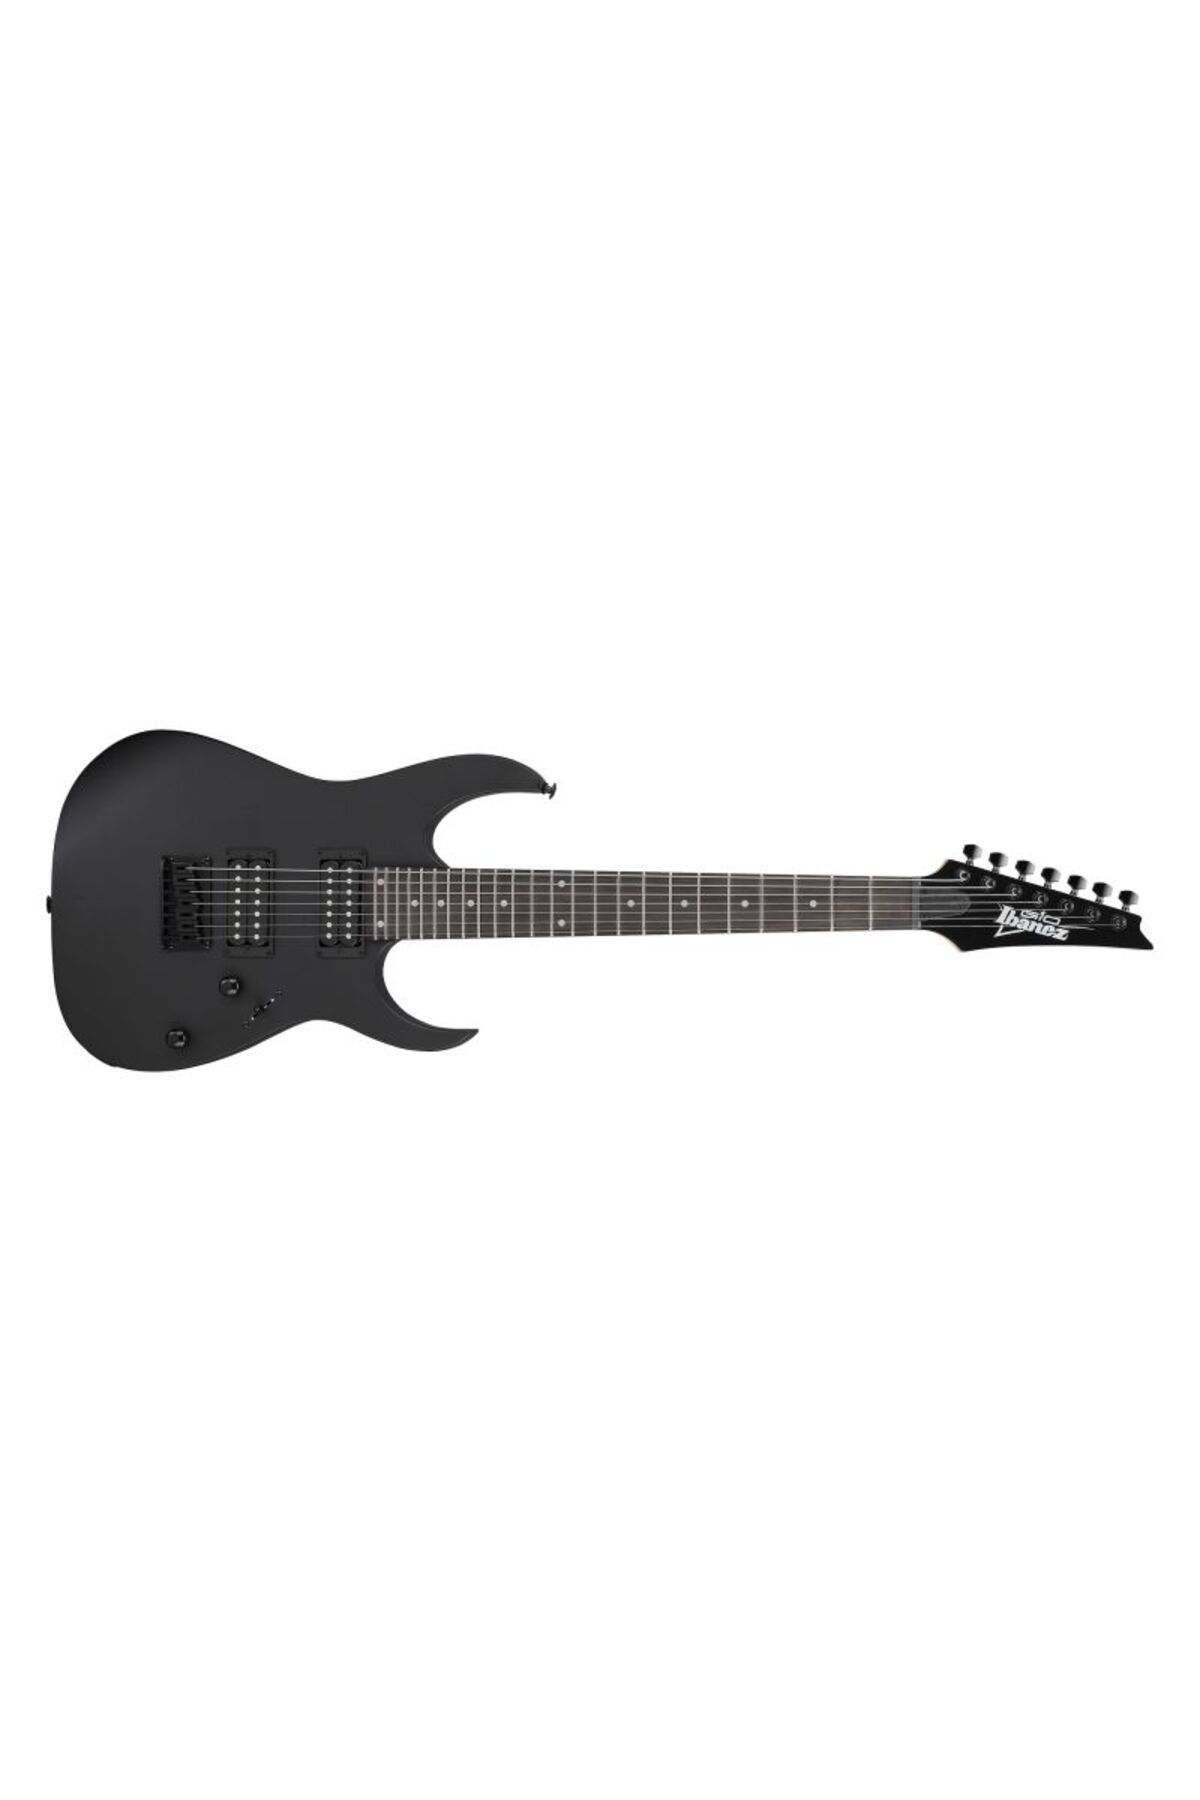 Ibanez Grg7221 Grg Series Bkf - Black Flat 7 Telli Elektro Gitar